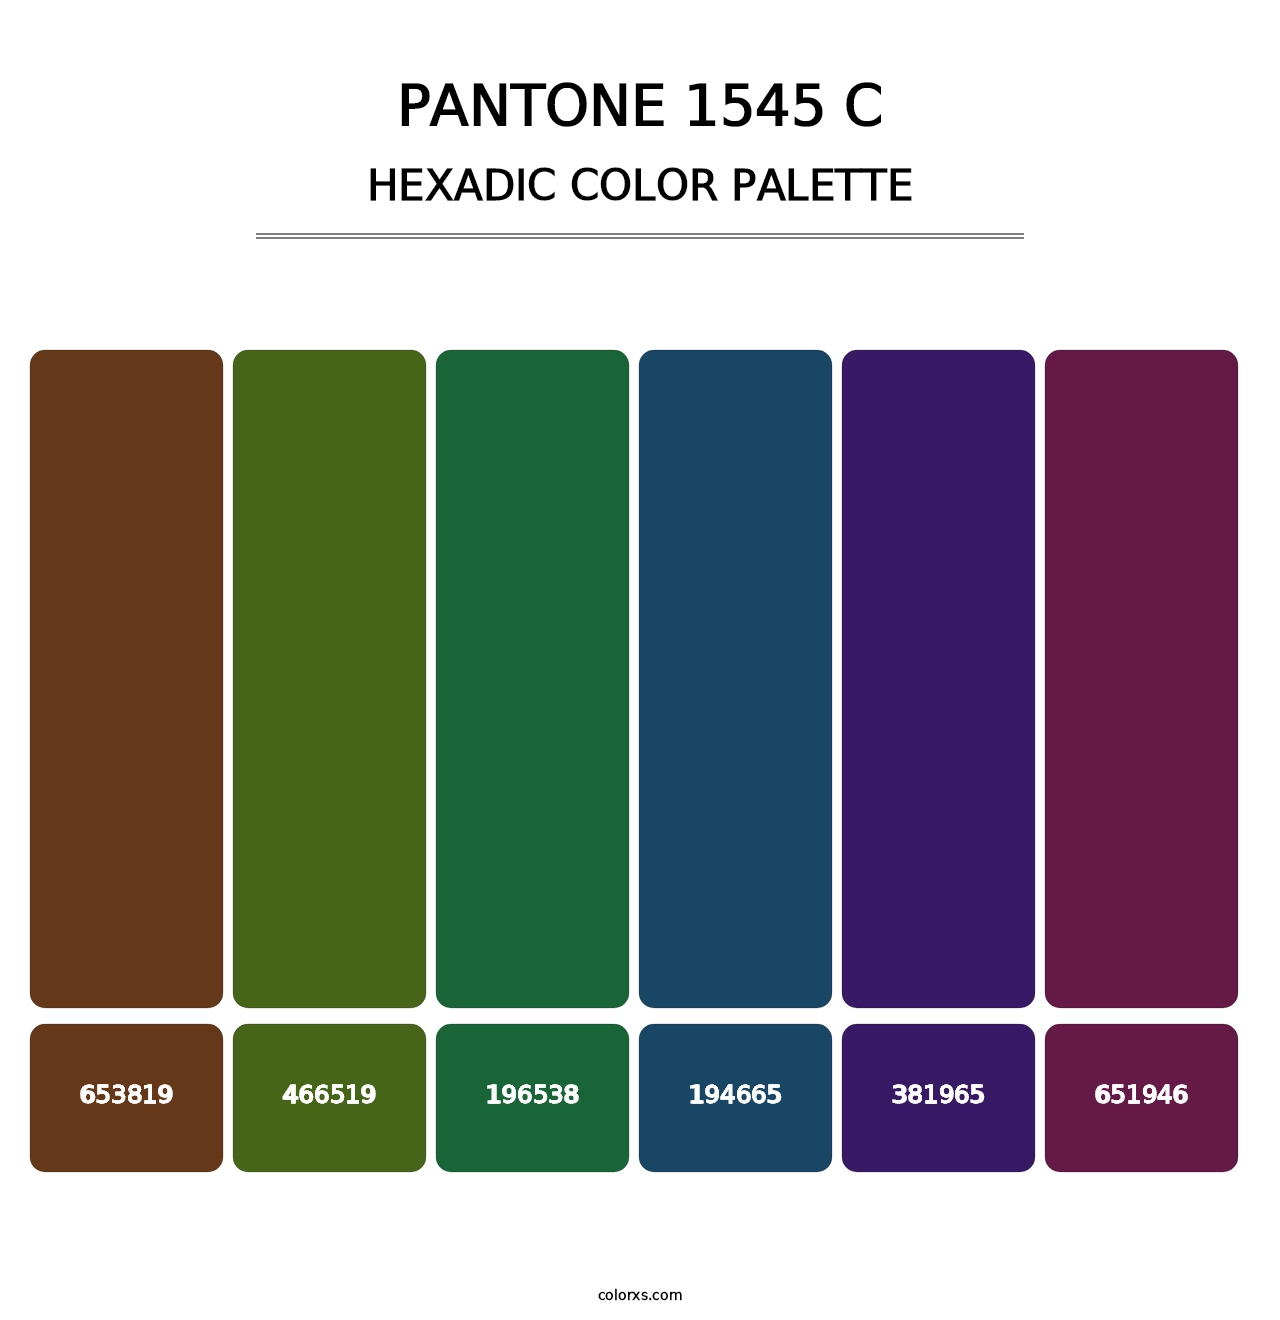 PANTONE 1545 C - Hexadic Color Palette